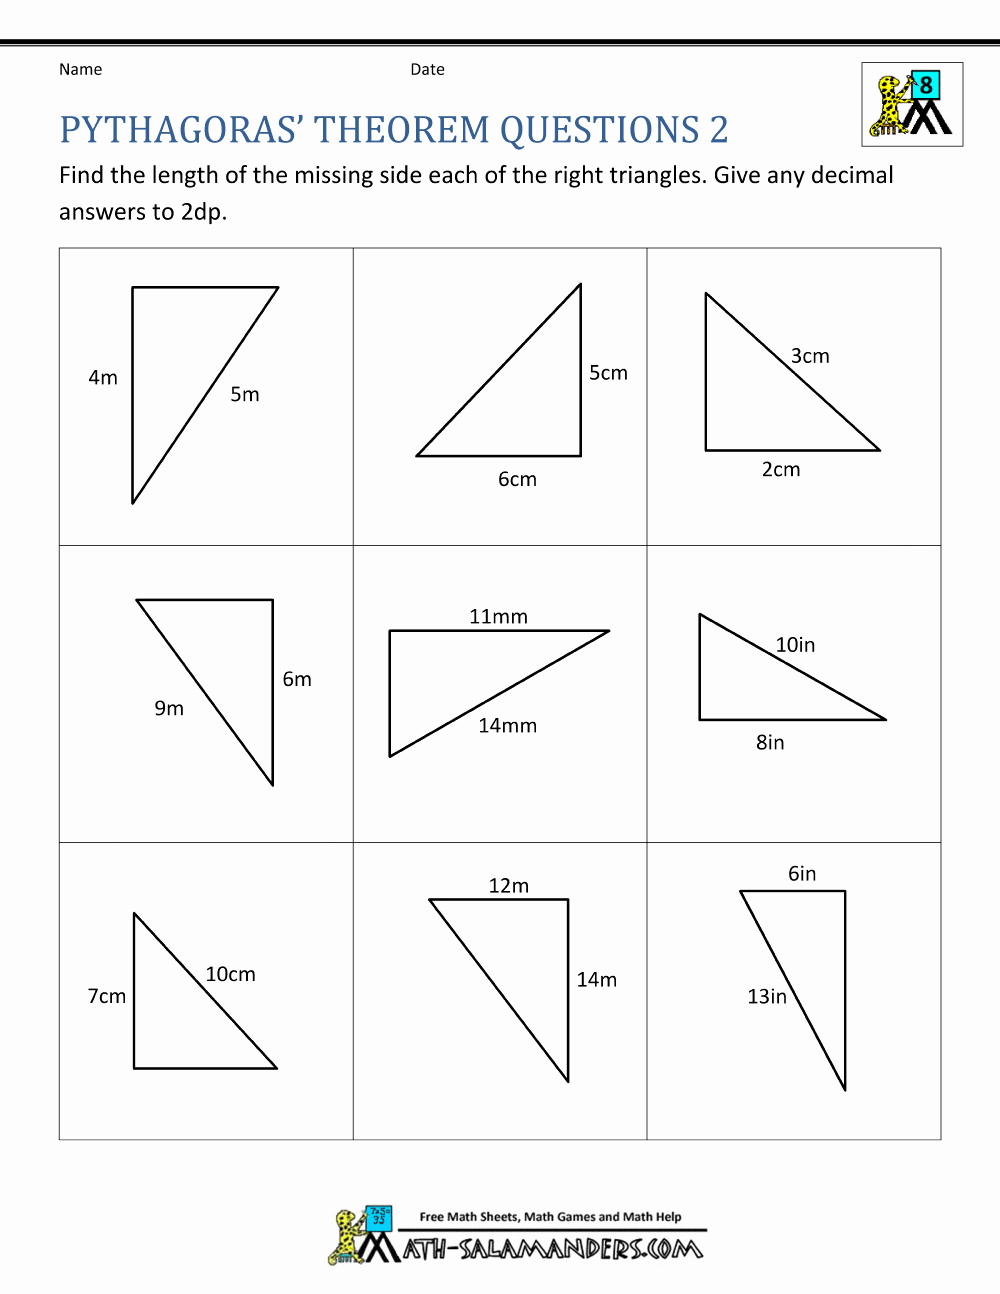 Pythagorean theorem Worksheet 8th Grade Awesome Pythagoras theorem Questions